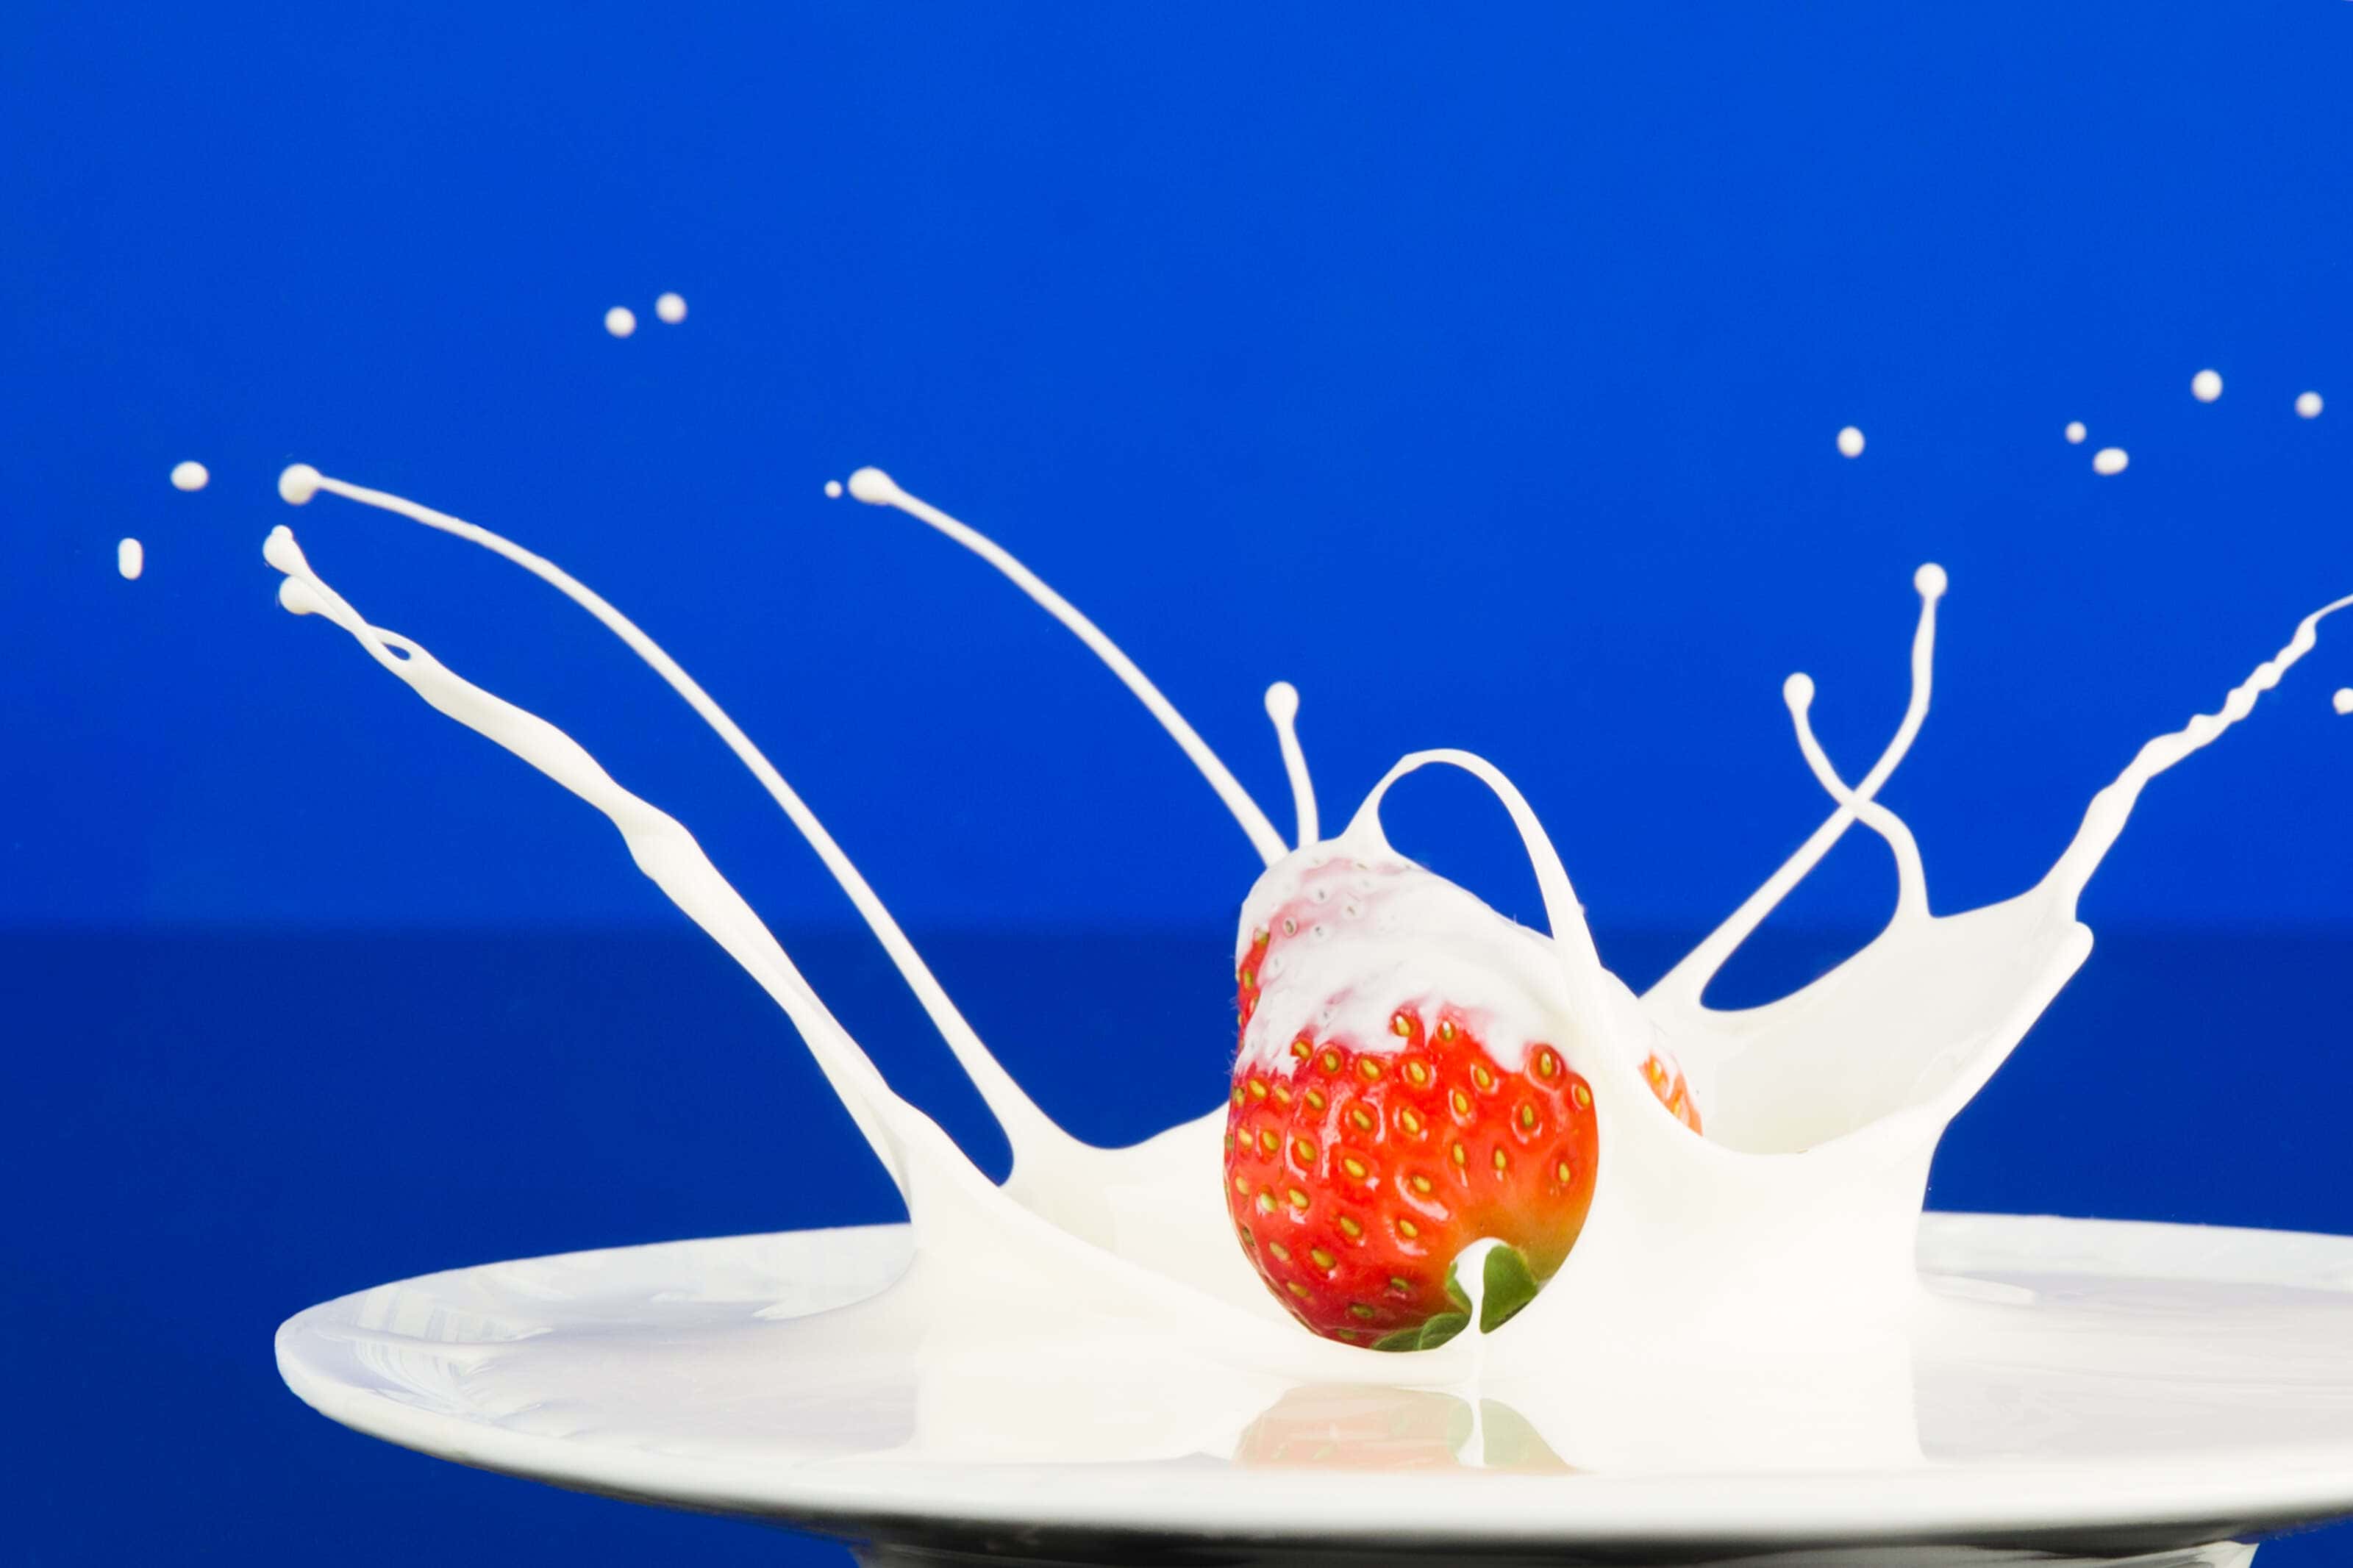 Strawberry falling onto plate of cream causing a splash.